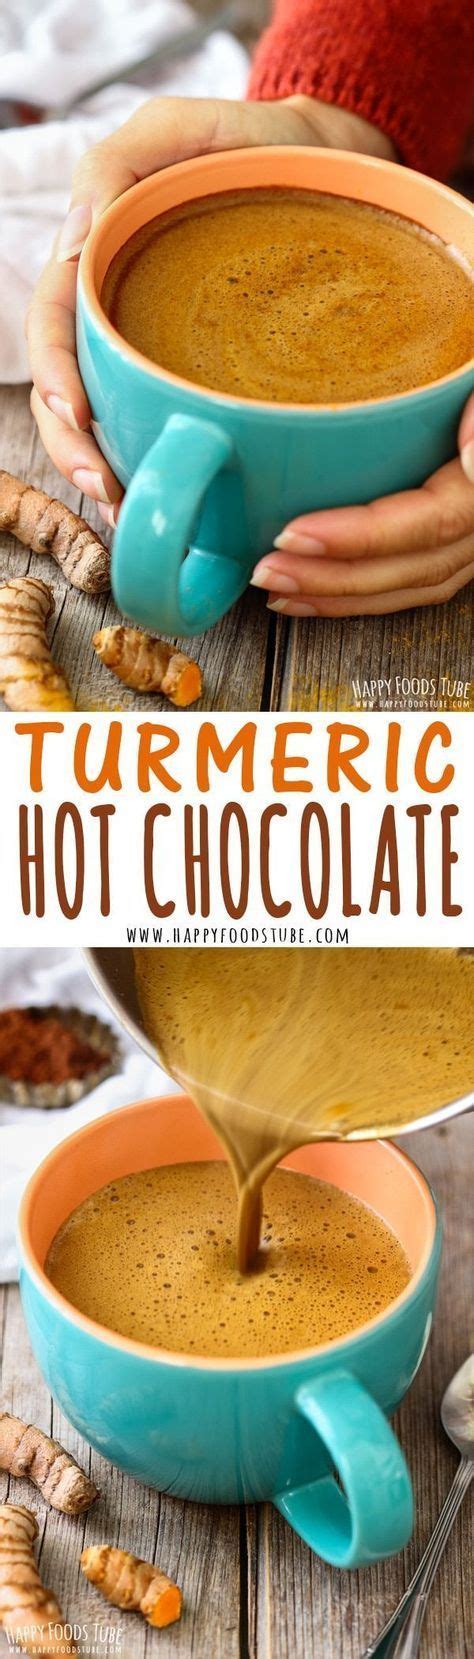 turmeric hot chocolate happy foods tube recipe turmeric recipes happy foods food